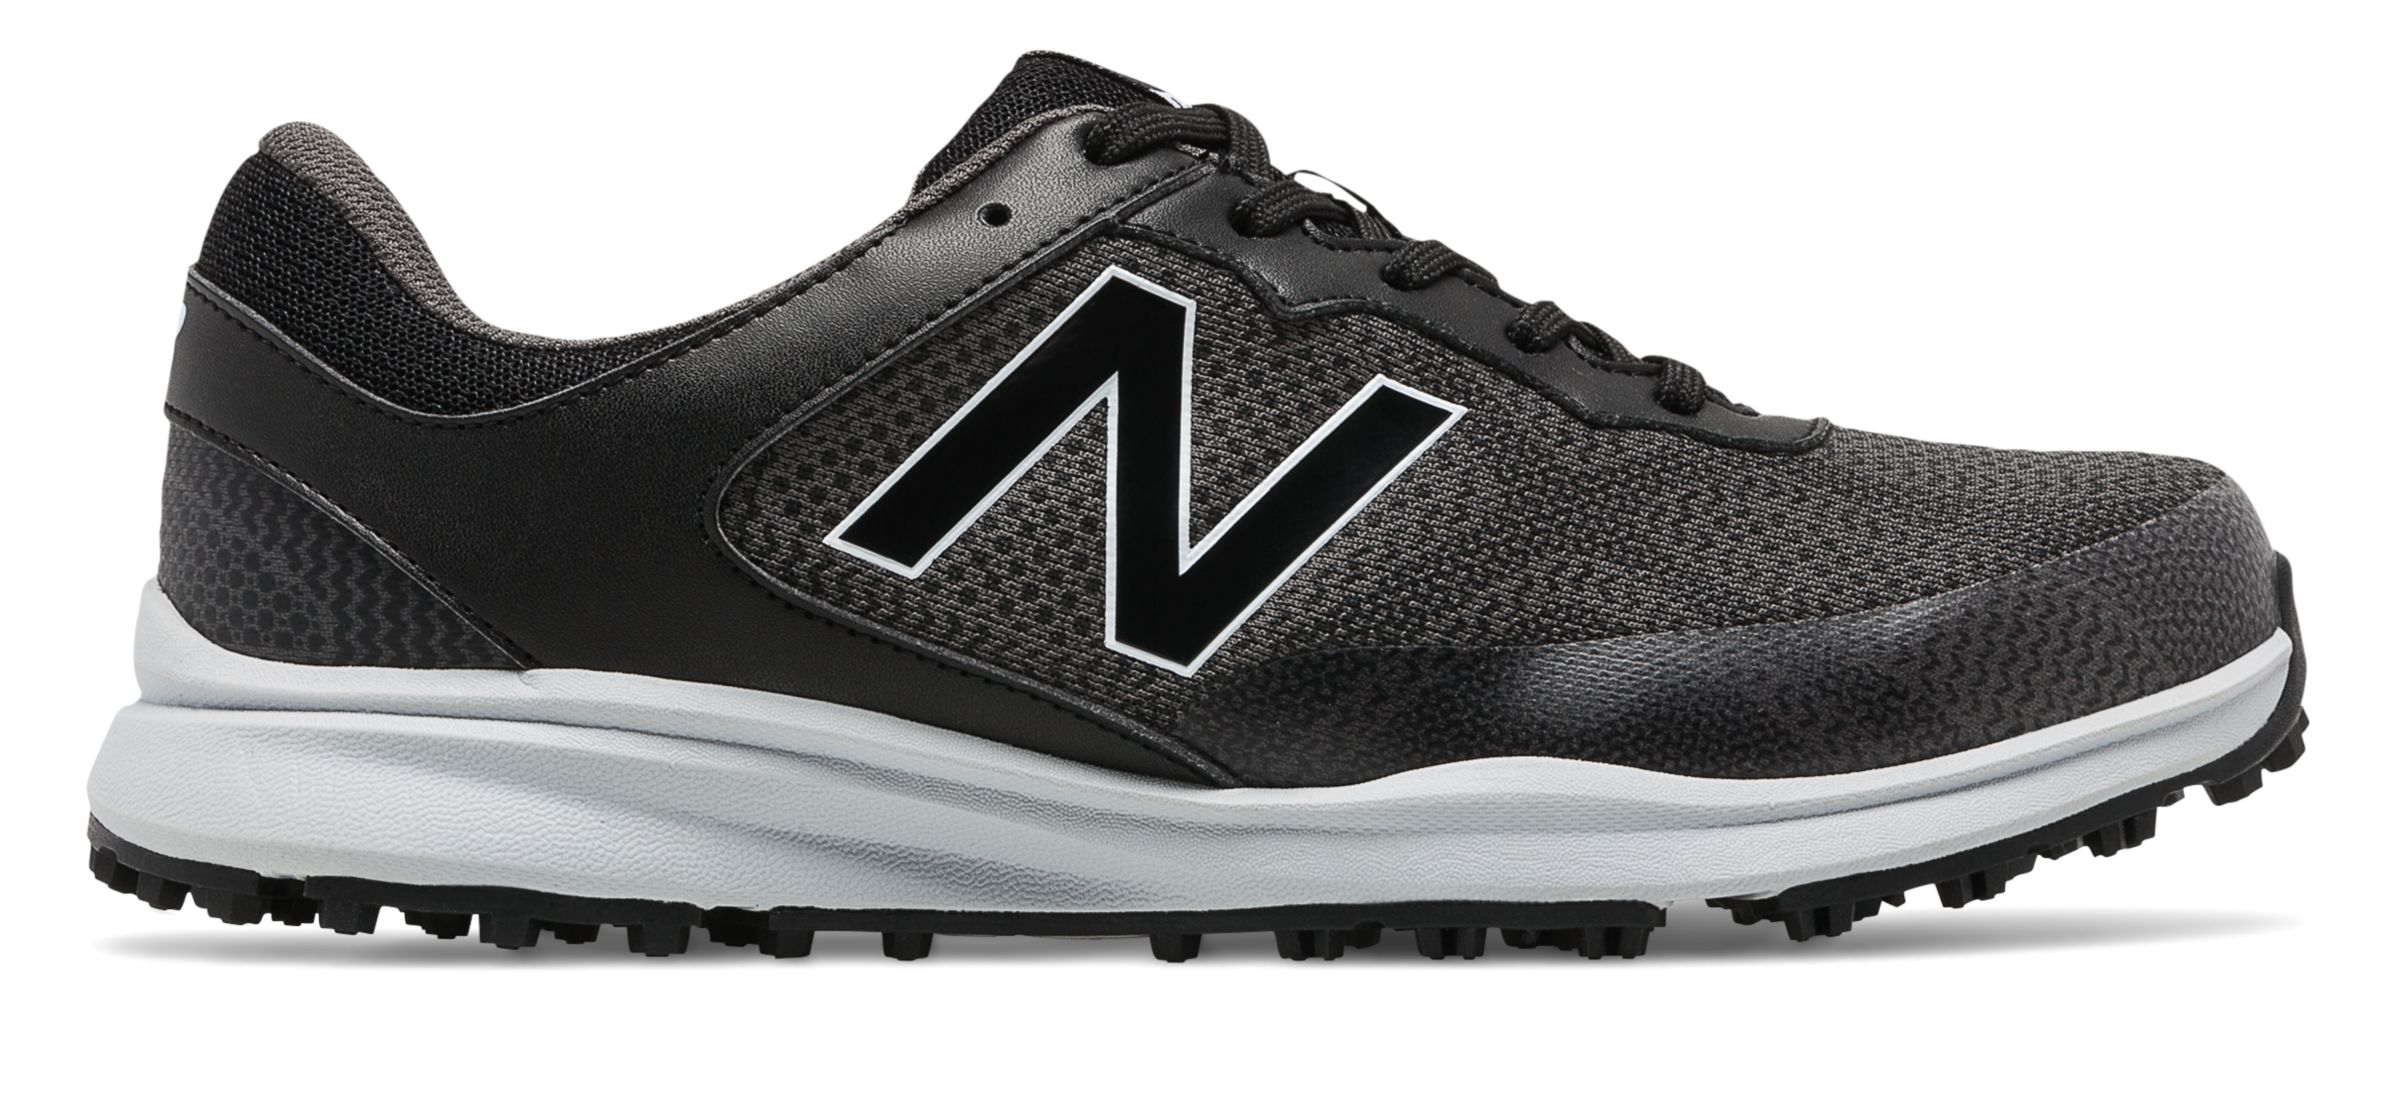 new balance waterproof golf shoes